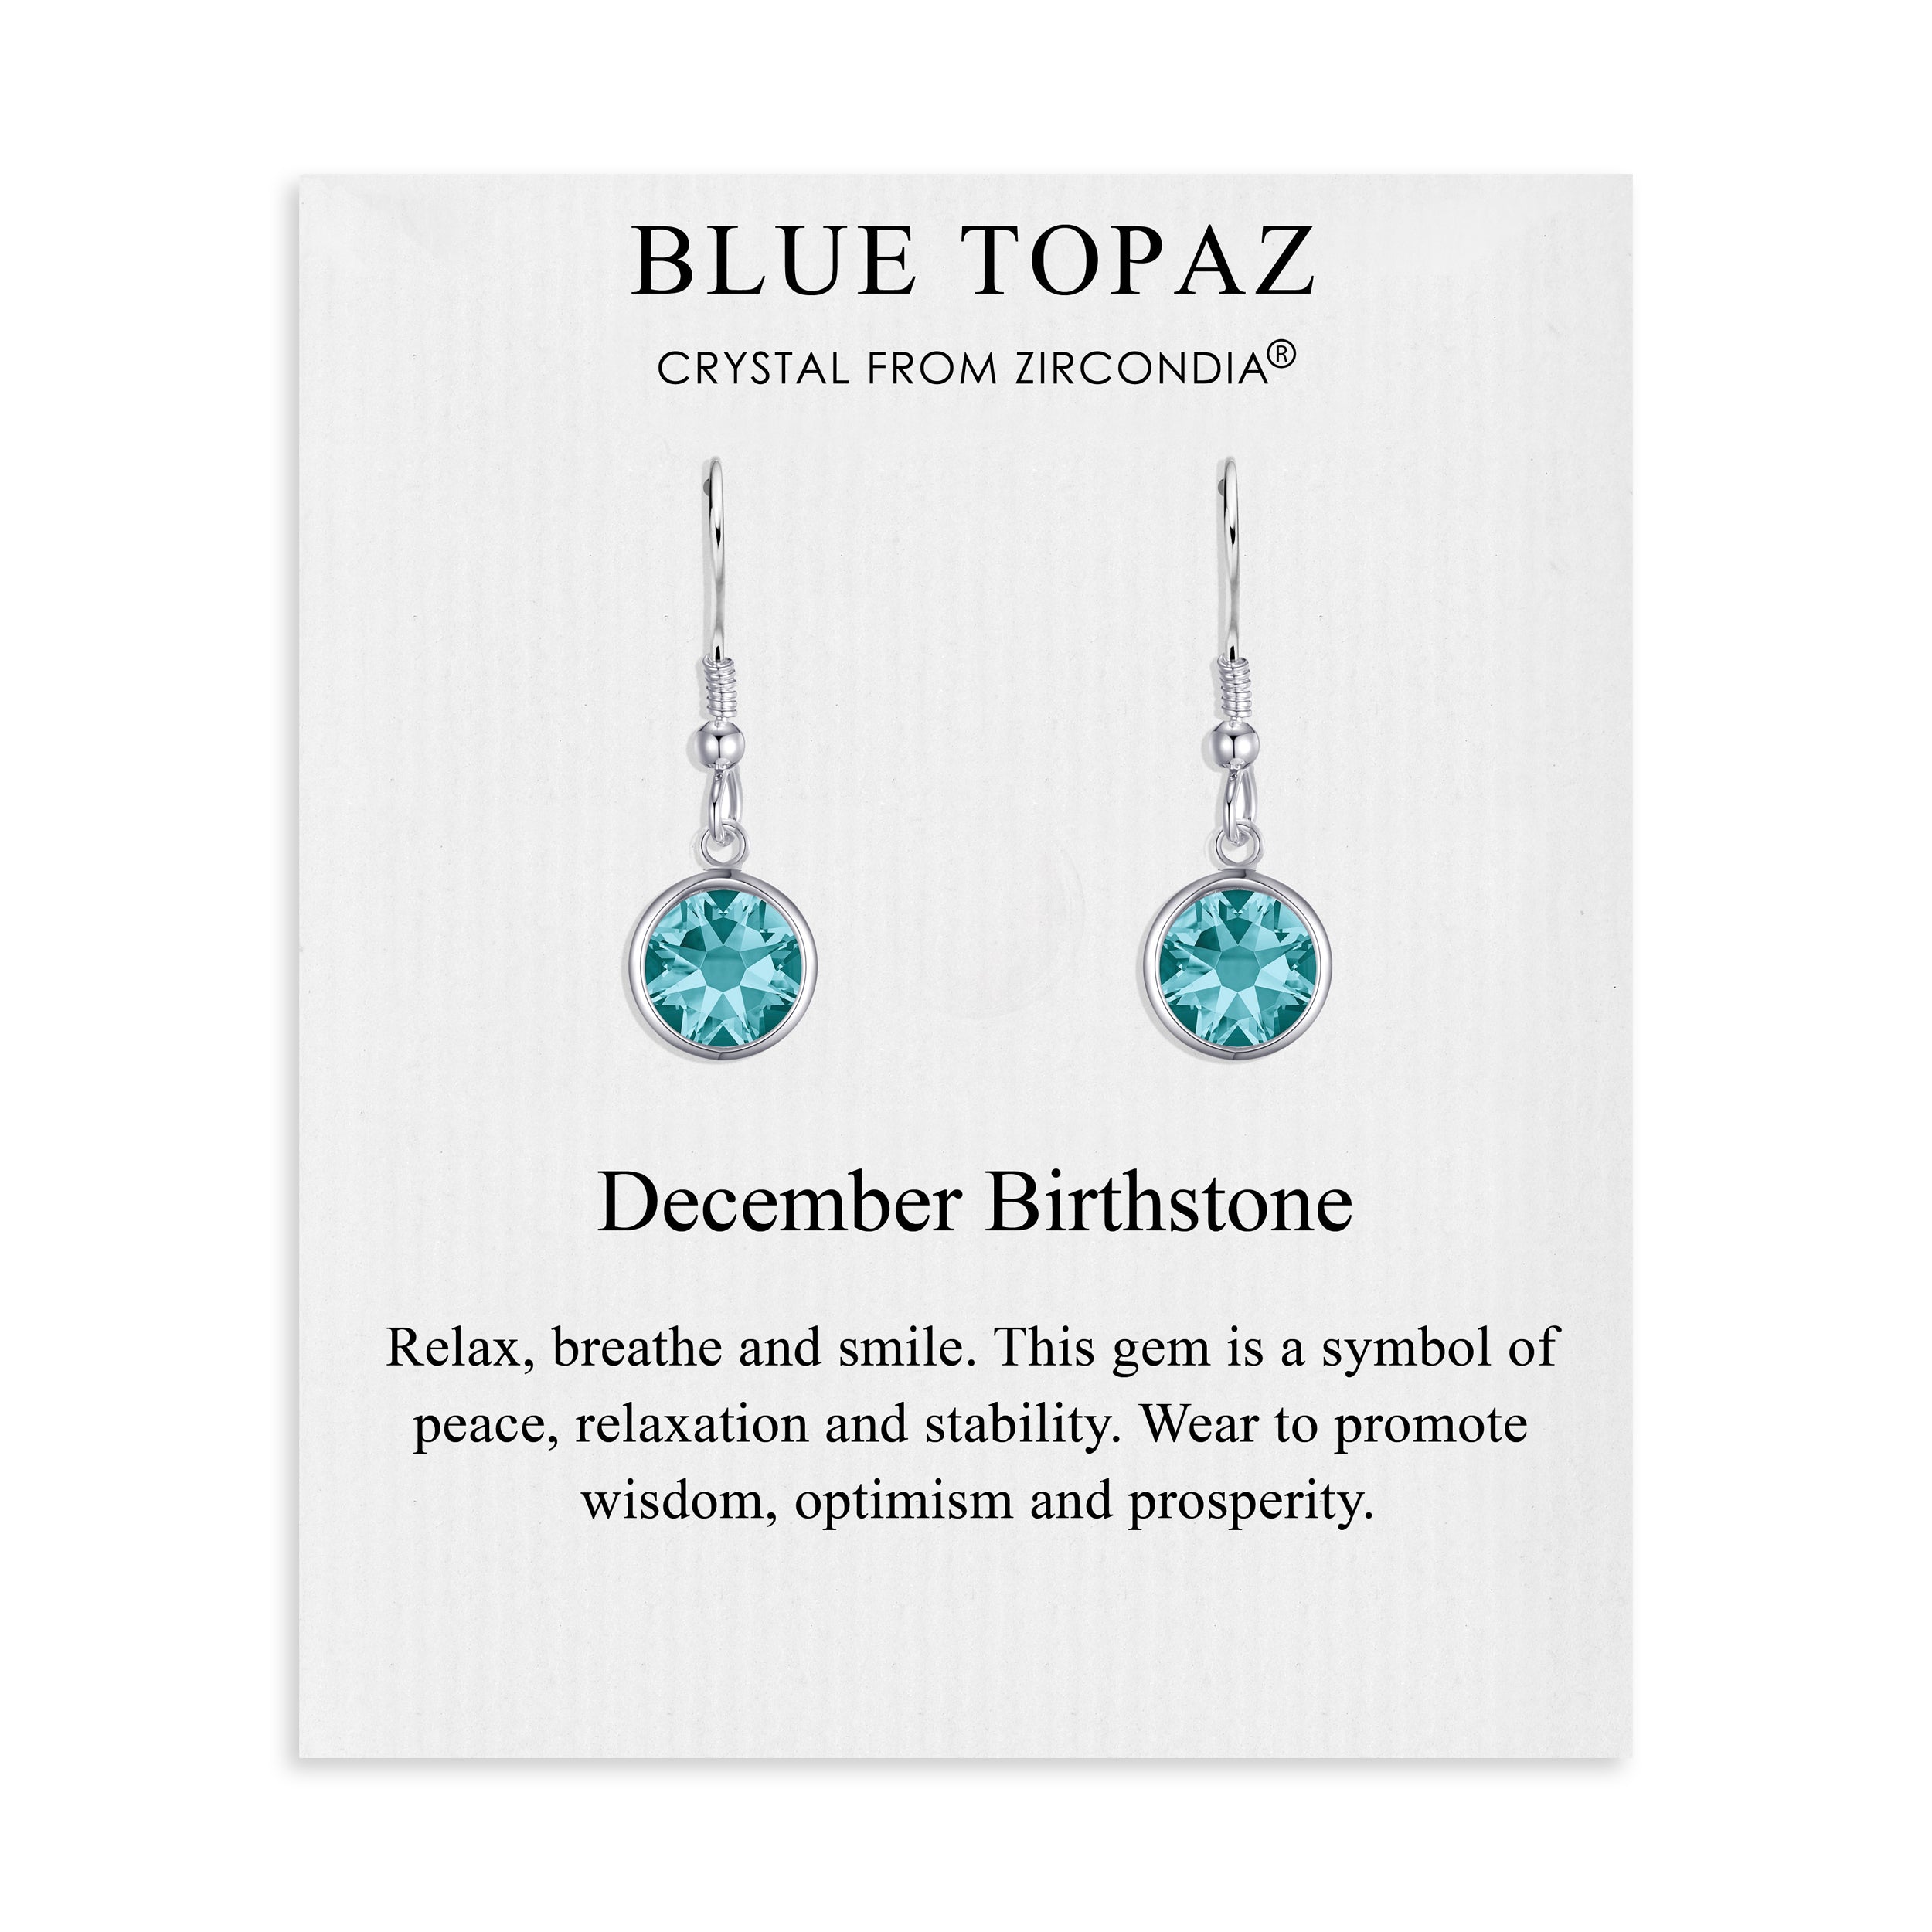 December Birthstone Drop Earrings Created with Blue Topaz Zircondia® Crystals by Philip Jones Jewellery